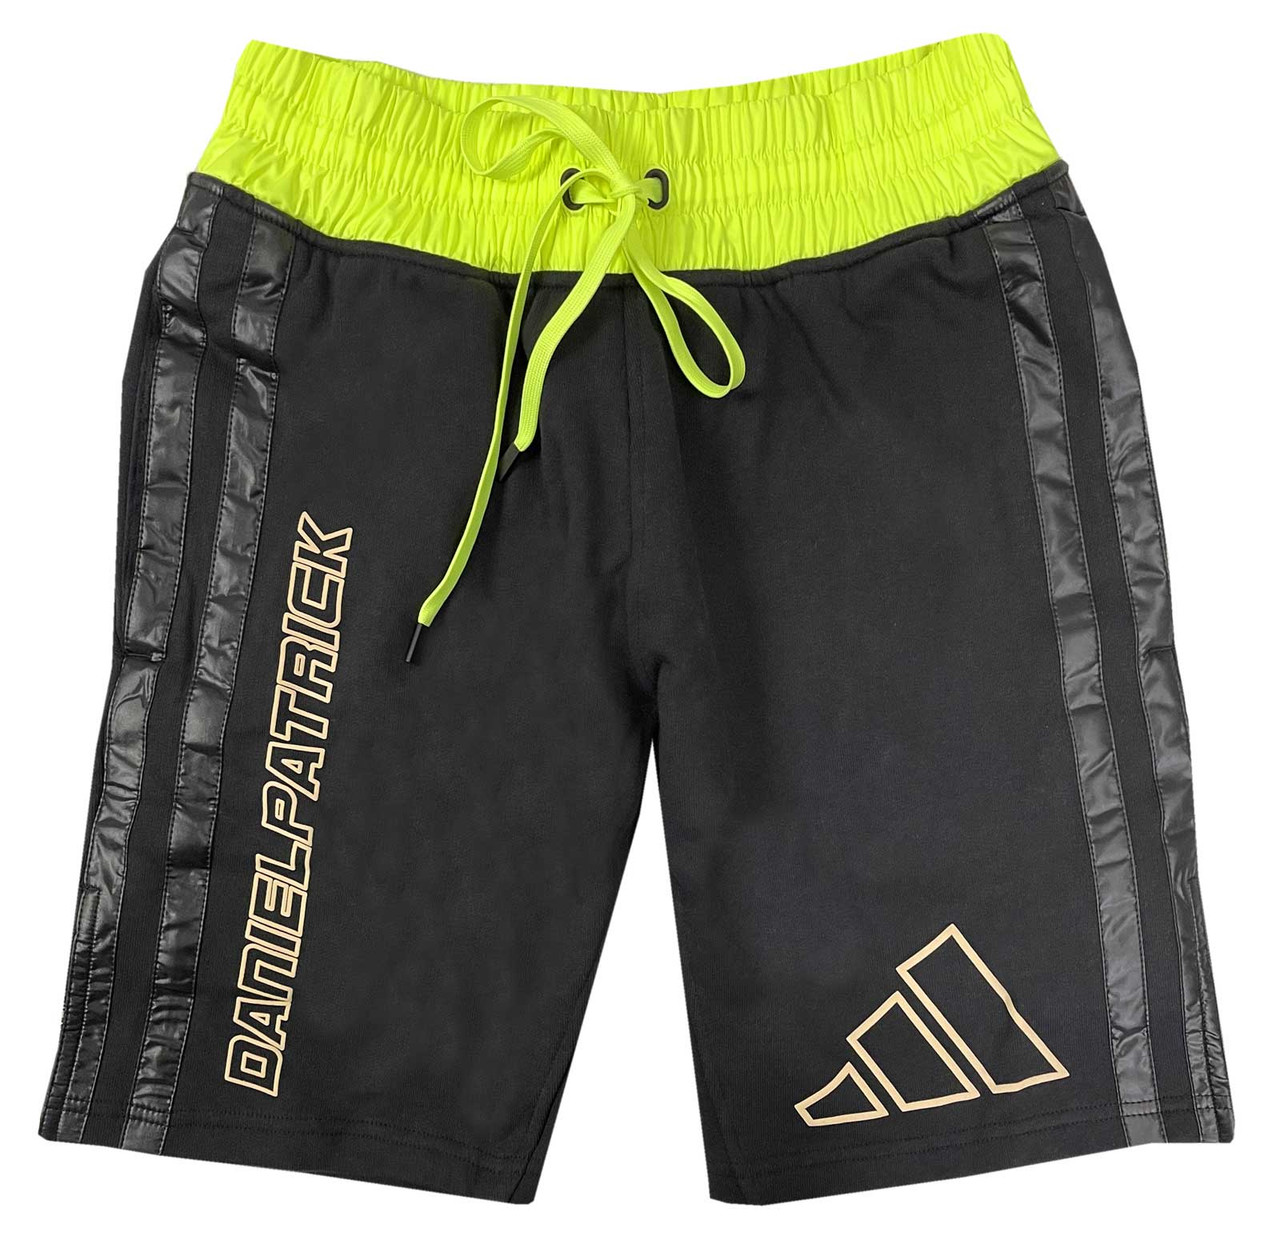 Adidas Men's Daniel Patrick & James Harden 3-Stripes Shorts Black/Solar ...